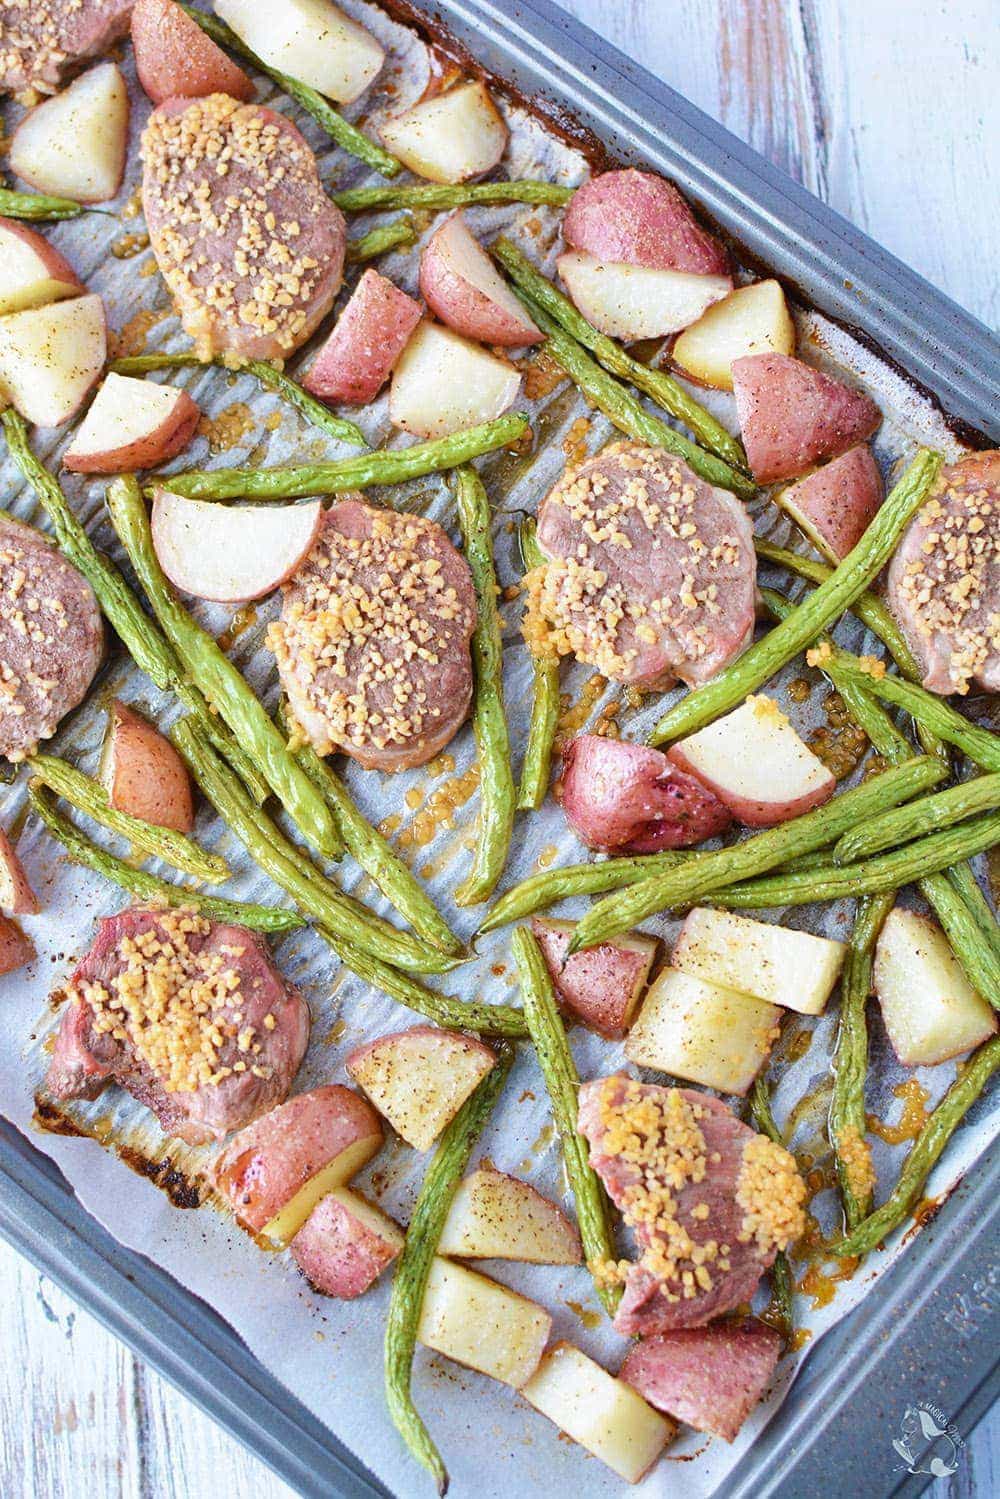 Pork sheet pan dinner with veggies and potatoes